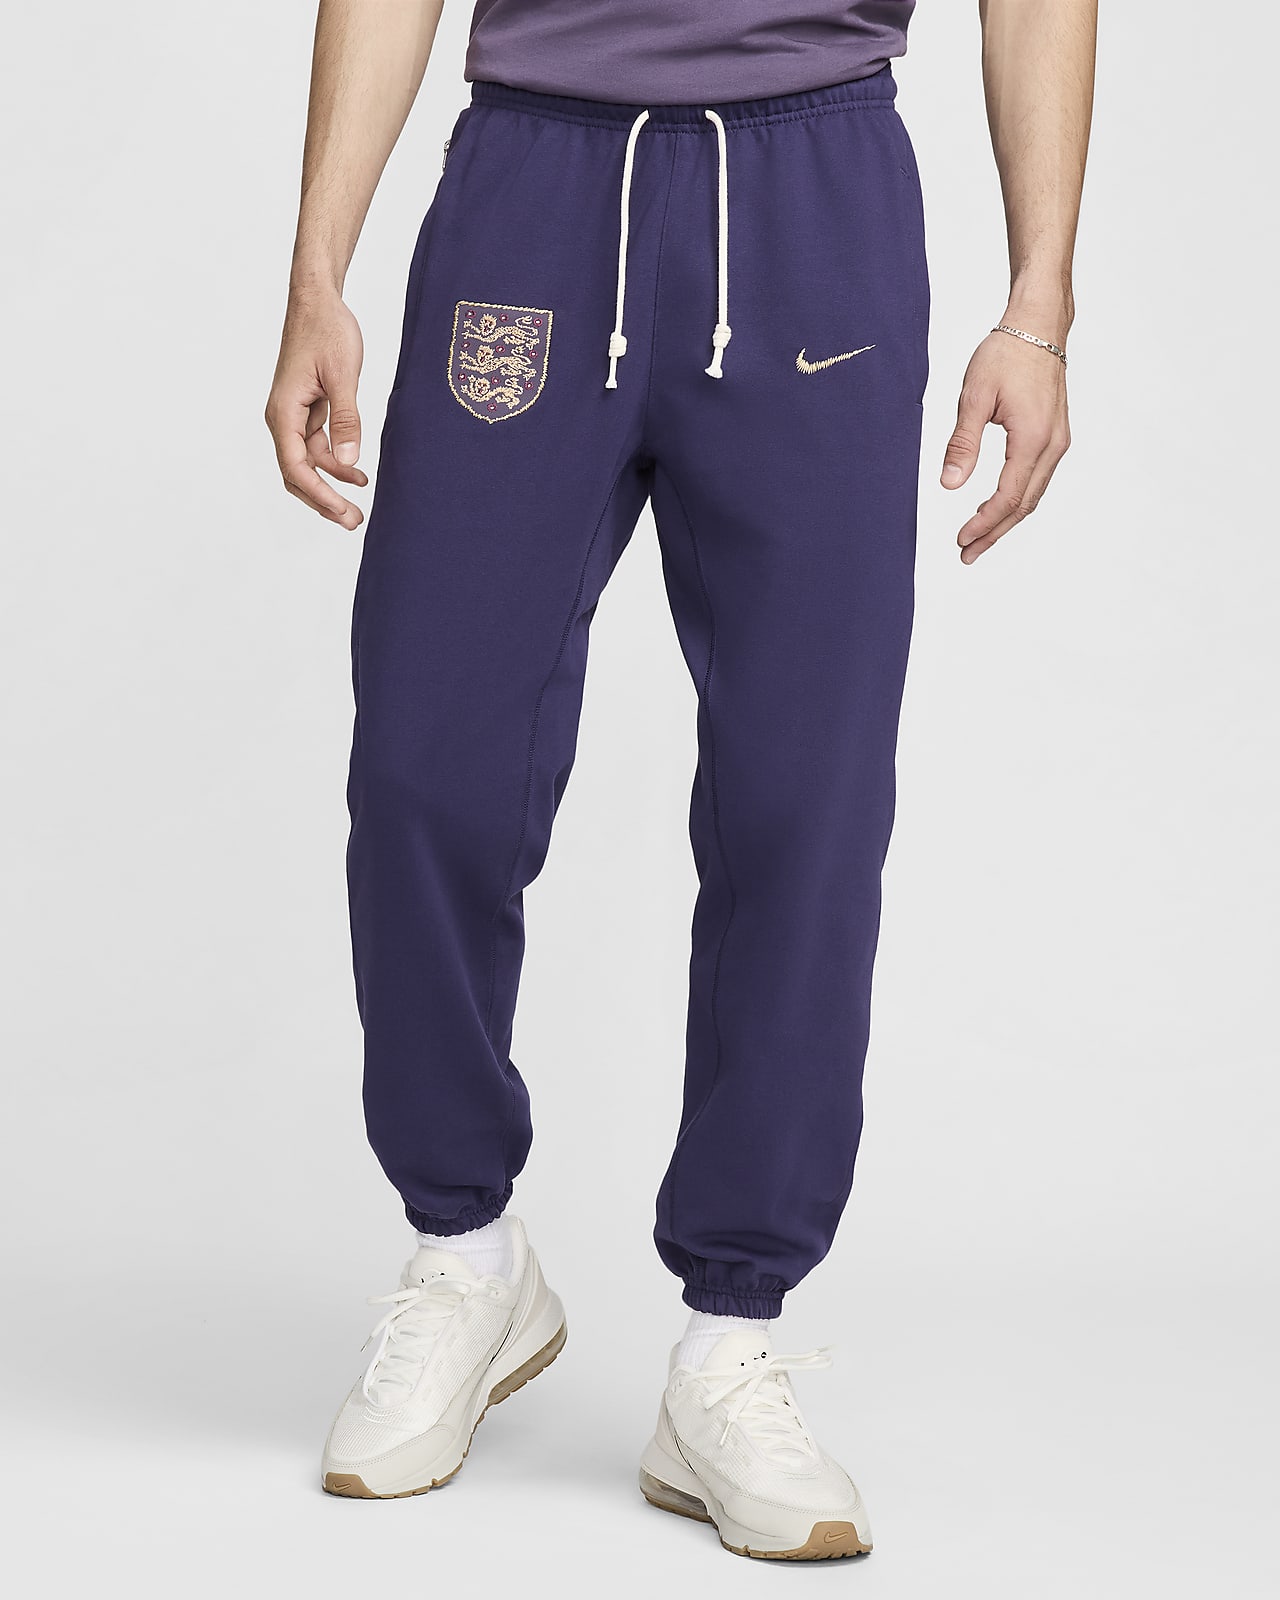 Engeland Standard Issue Nike voetbalbroek voor heren